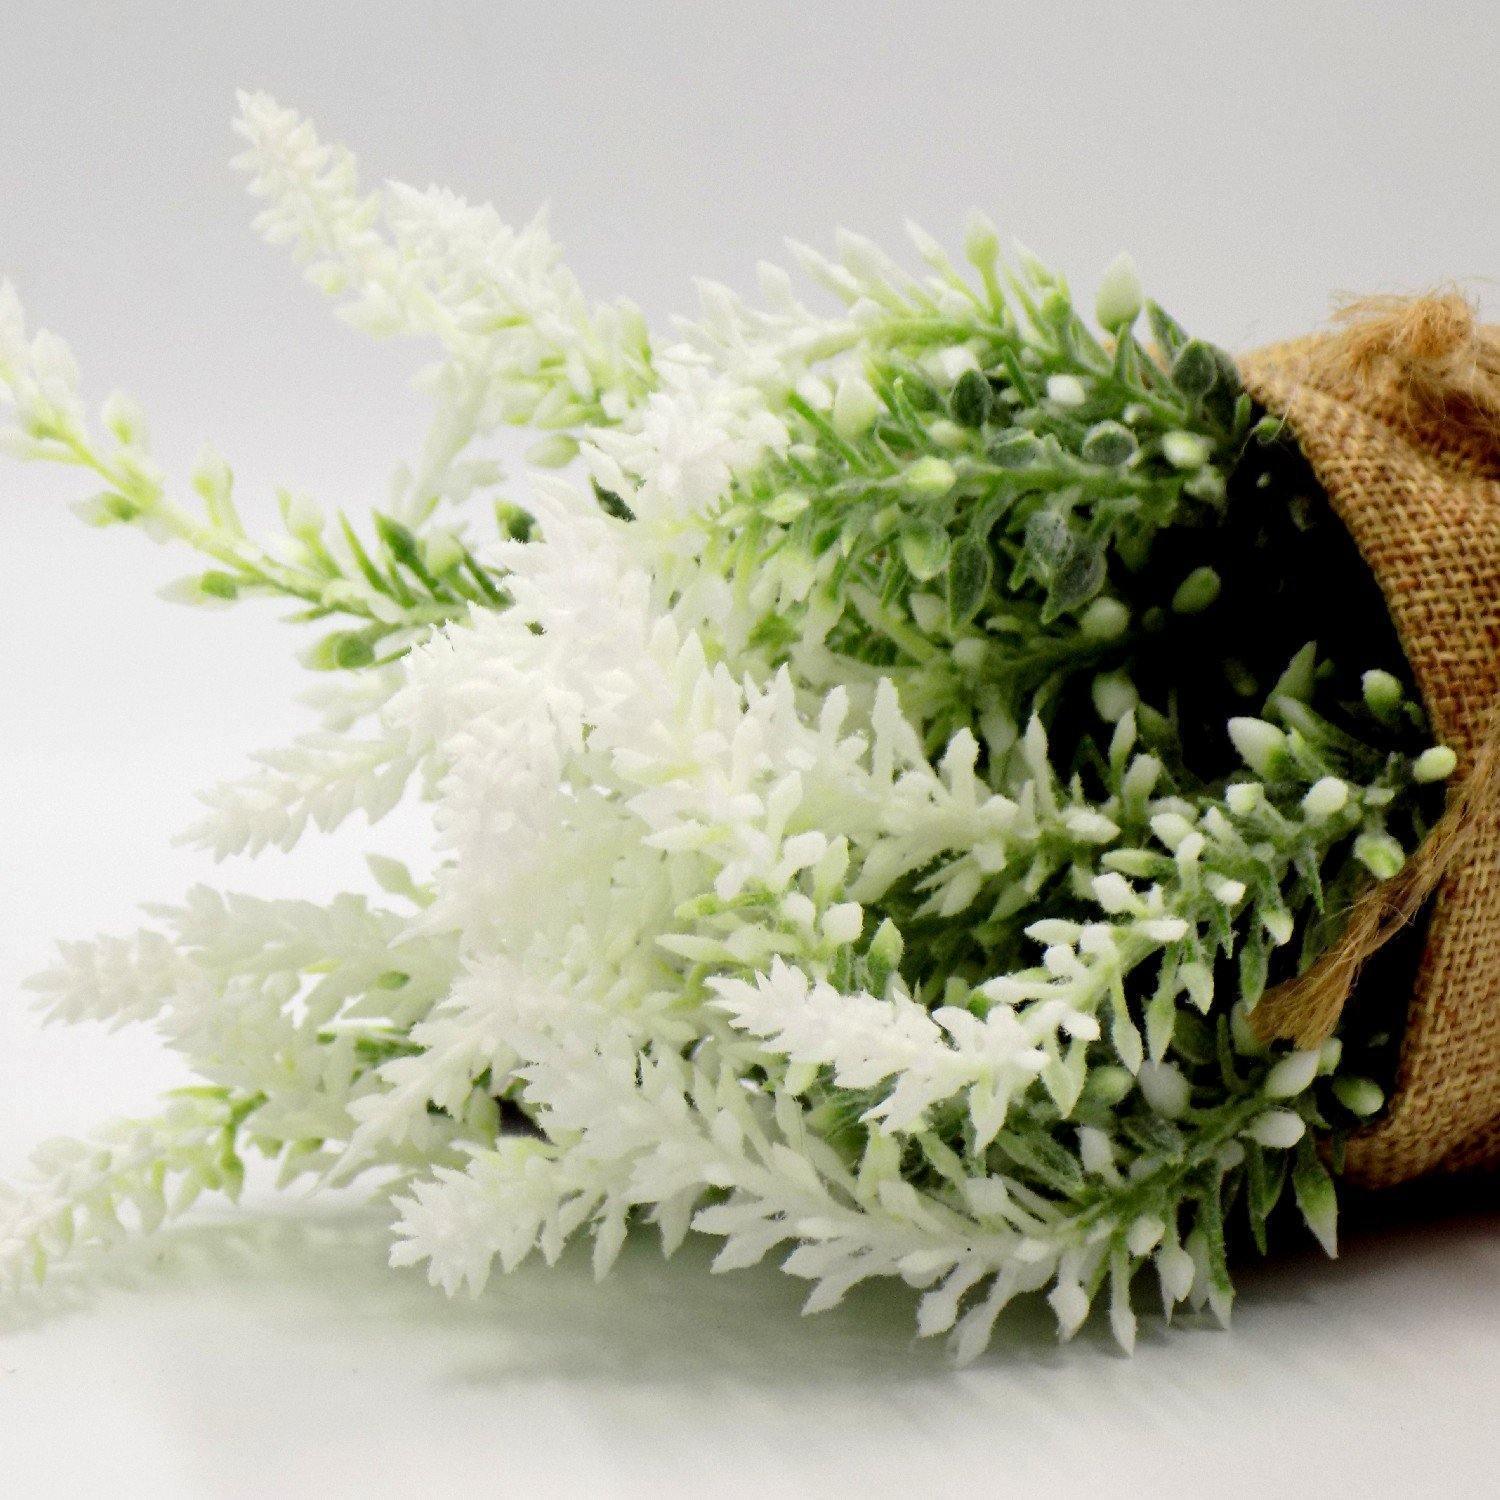 Artificial Flower Plant with Sack Bag, Green, Jute & Plastic - MARKET 99